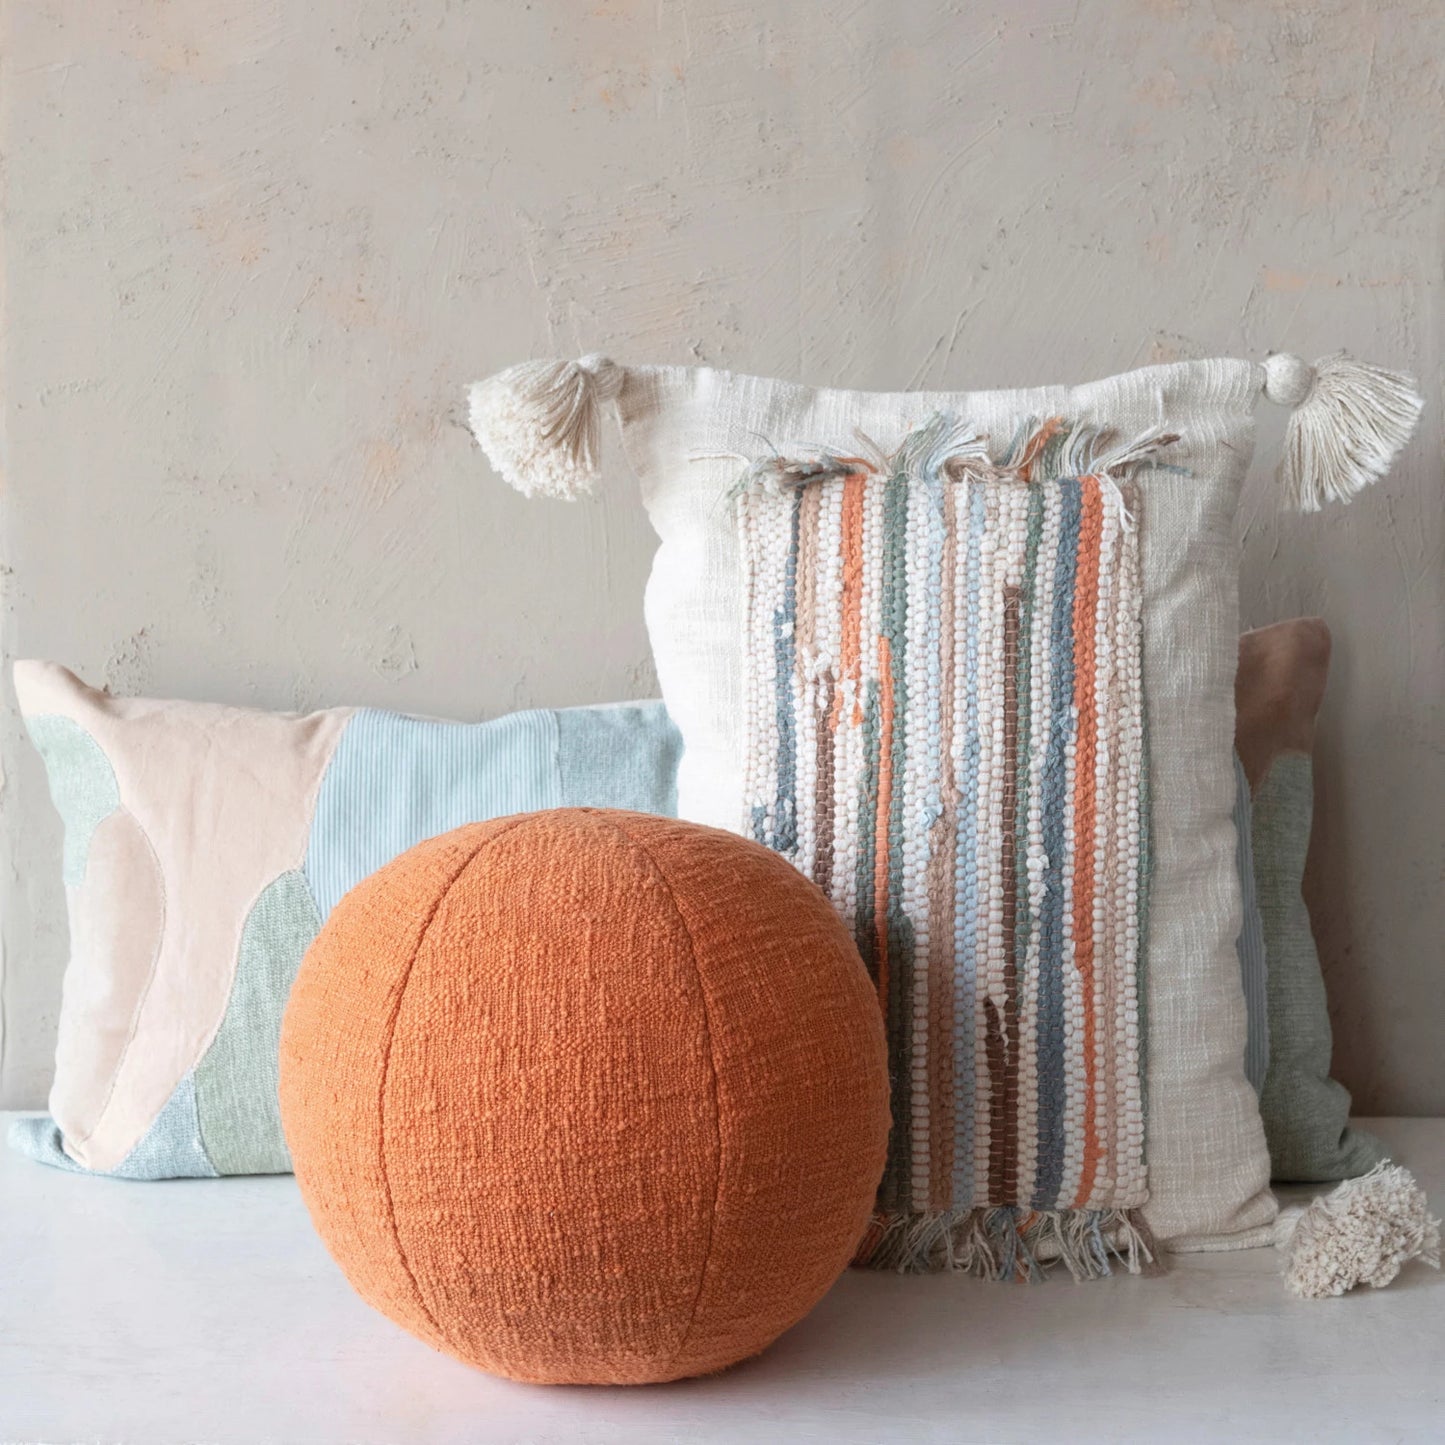 Woven Cotton Lumbar Pillow w/Applique, Fringe & Tassles